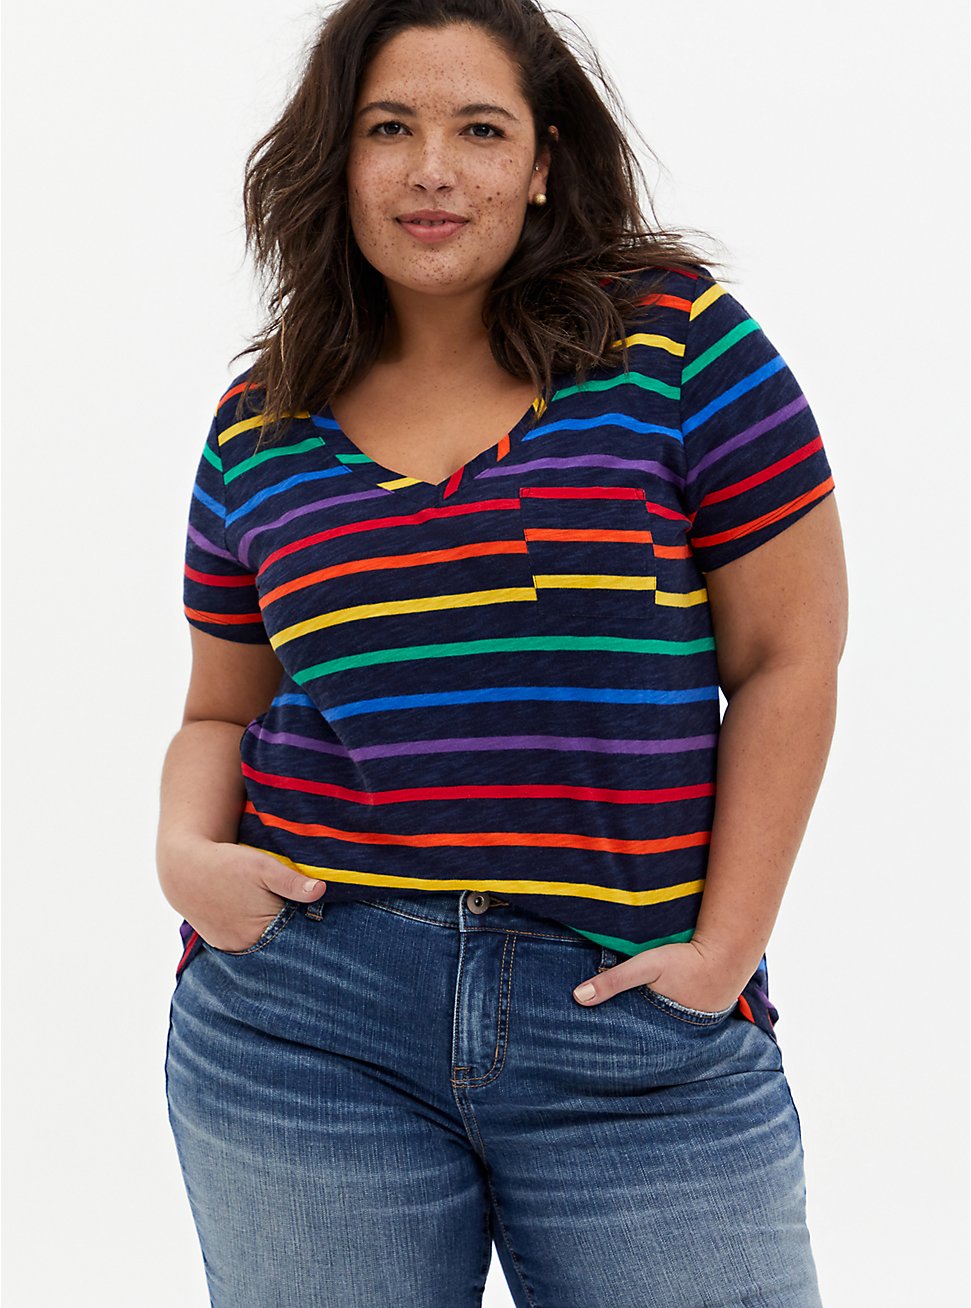 Women Loose Rainbow Striped Long Sleeve Crew Neck Tee Top Blouse Plus Size